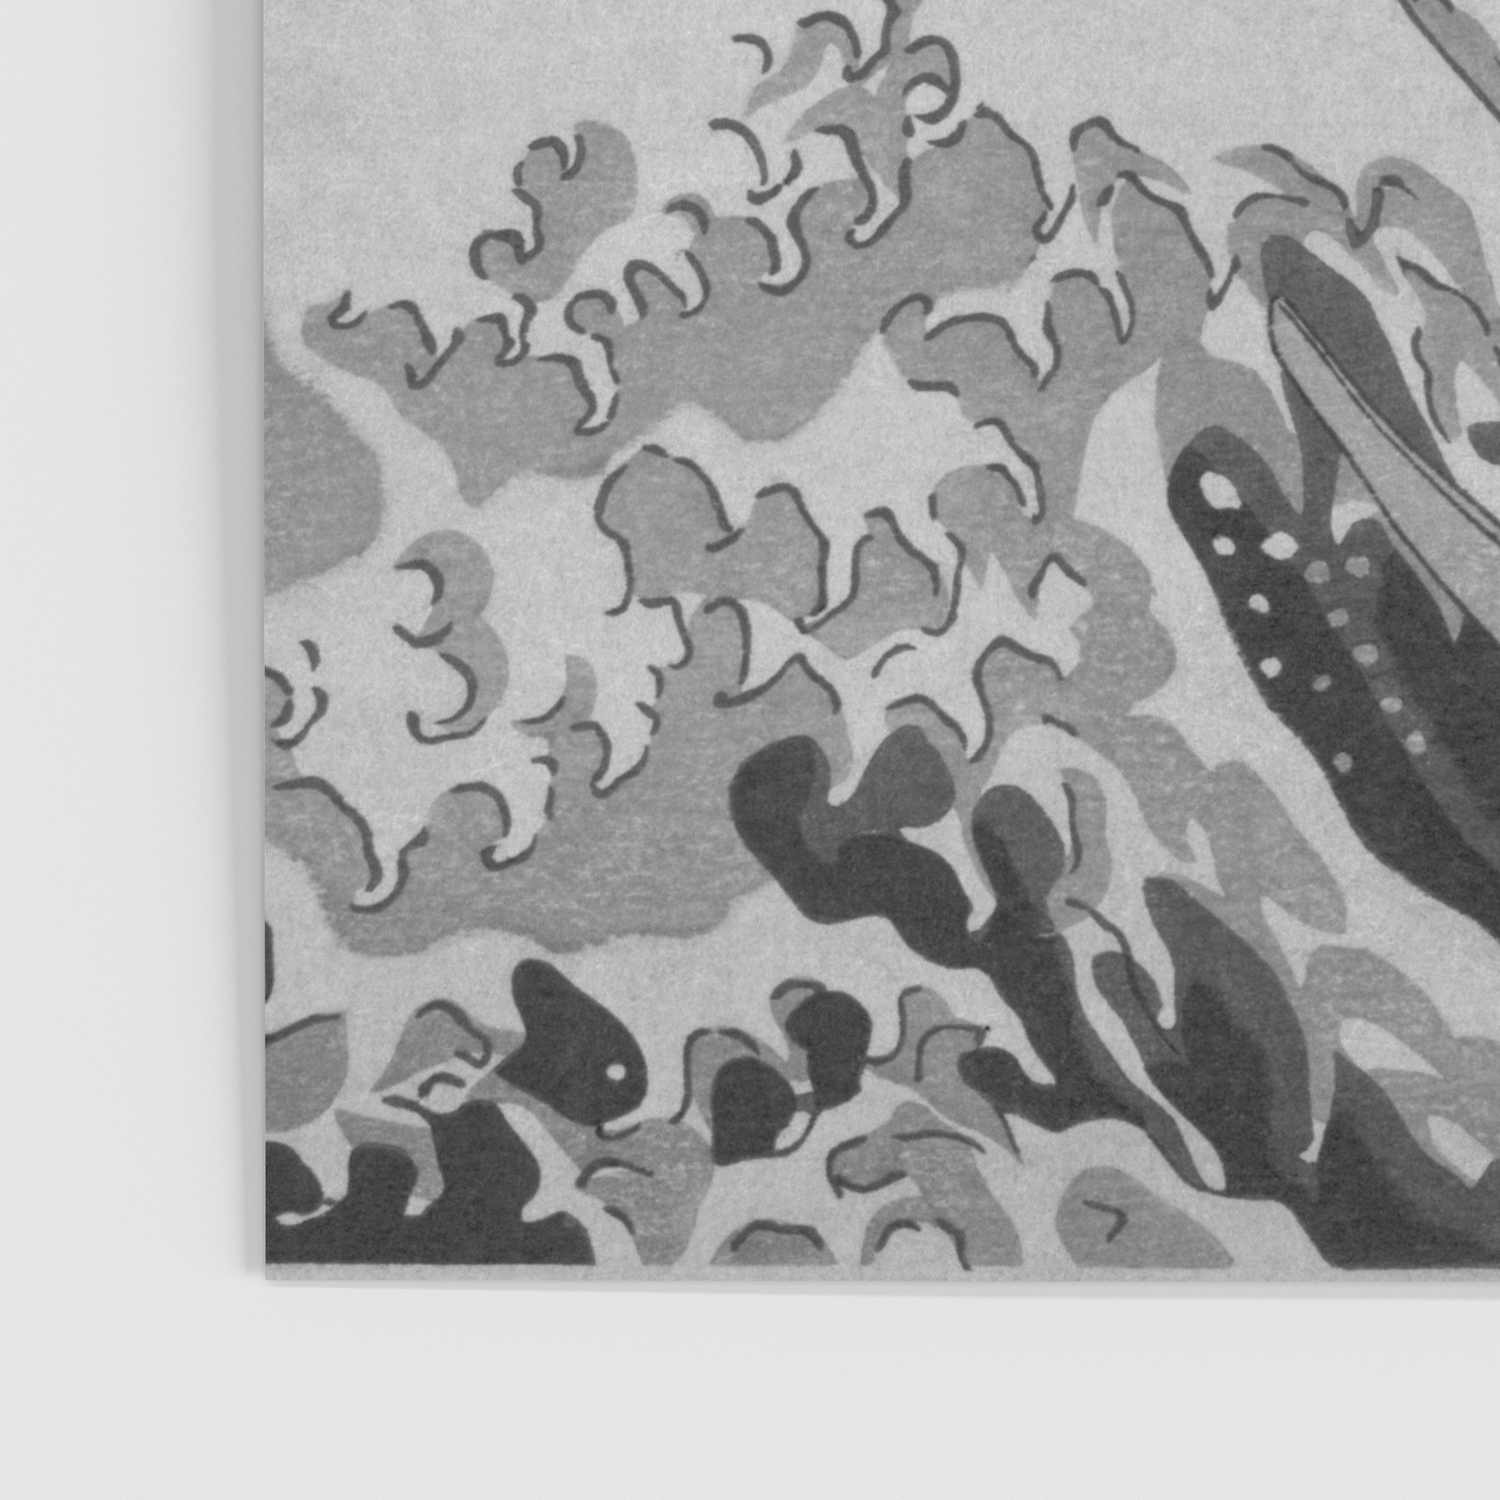 Society6 Black & White Japanese Great Wave Off Kanagawa by Hokusai by Podartist on Rectangular Pillow